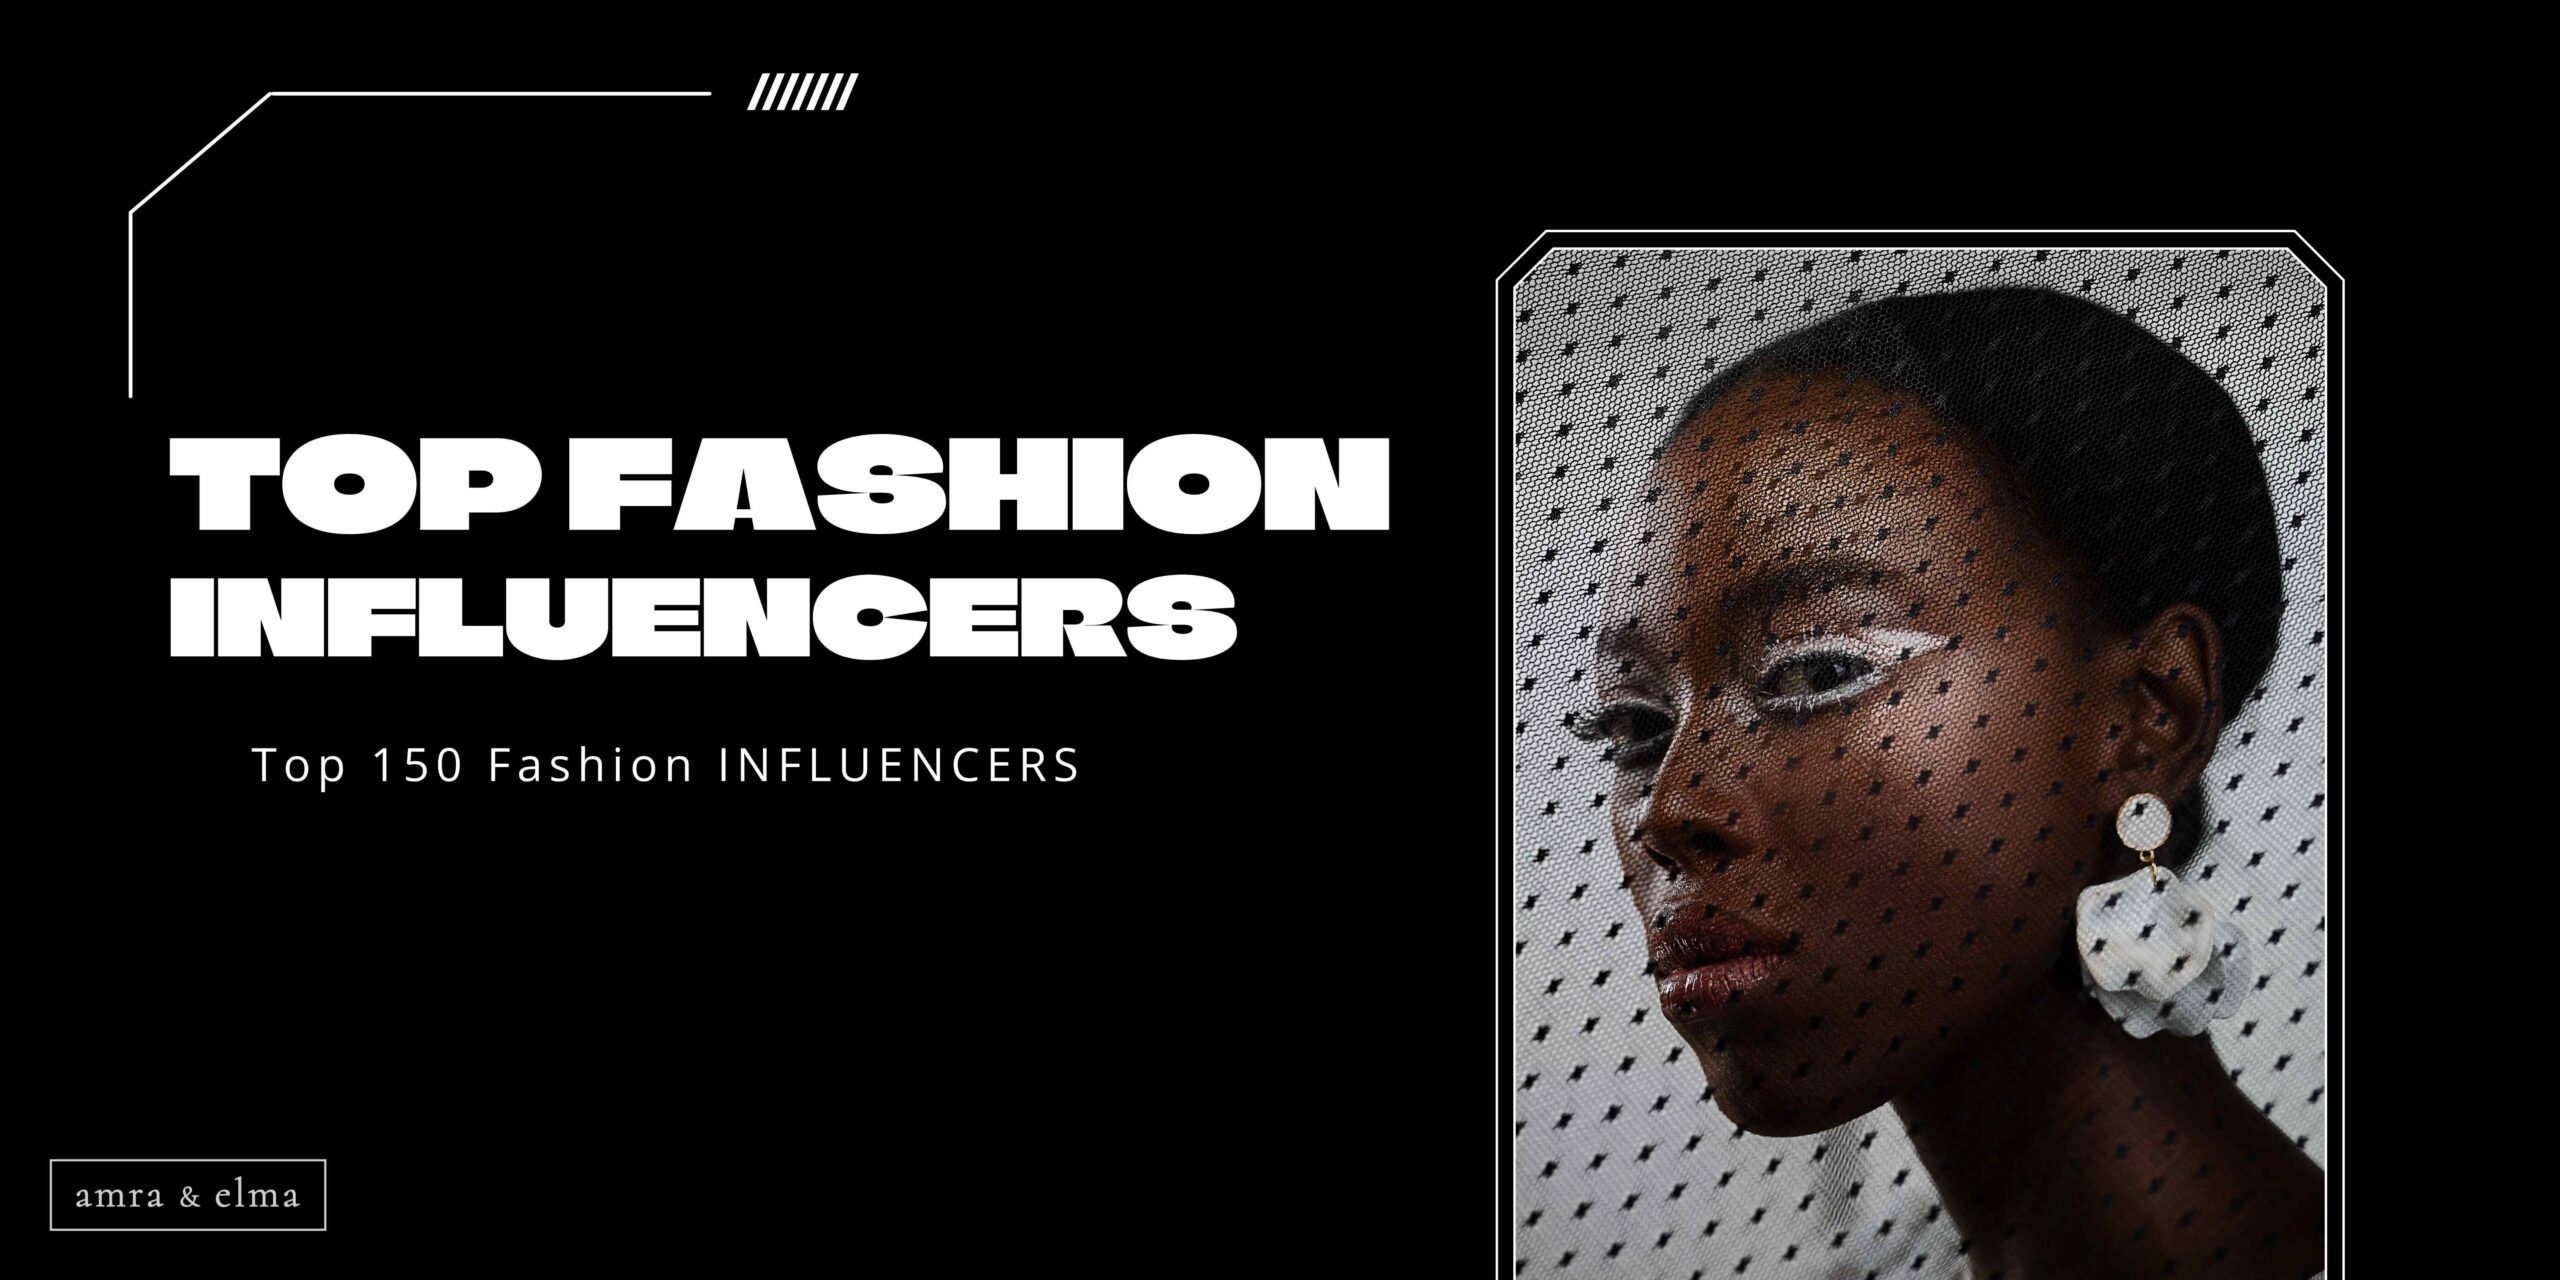 Fashion influencer - Wikipedia